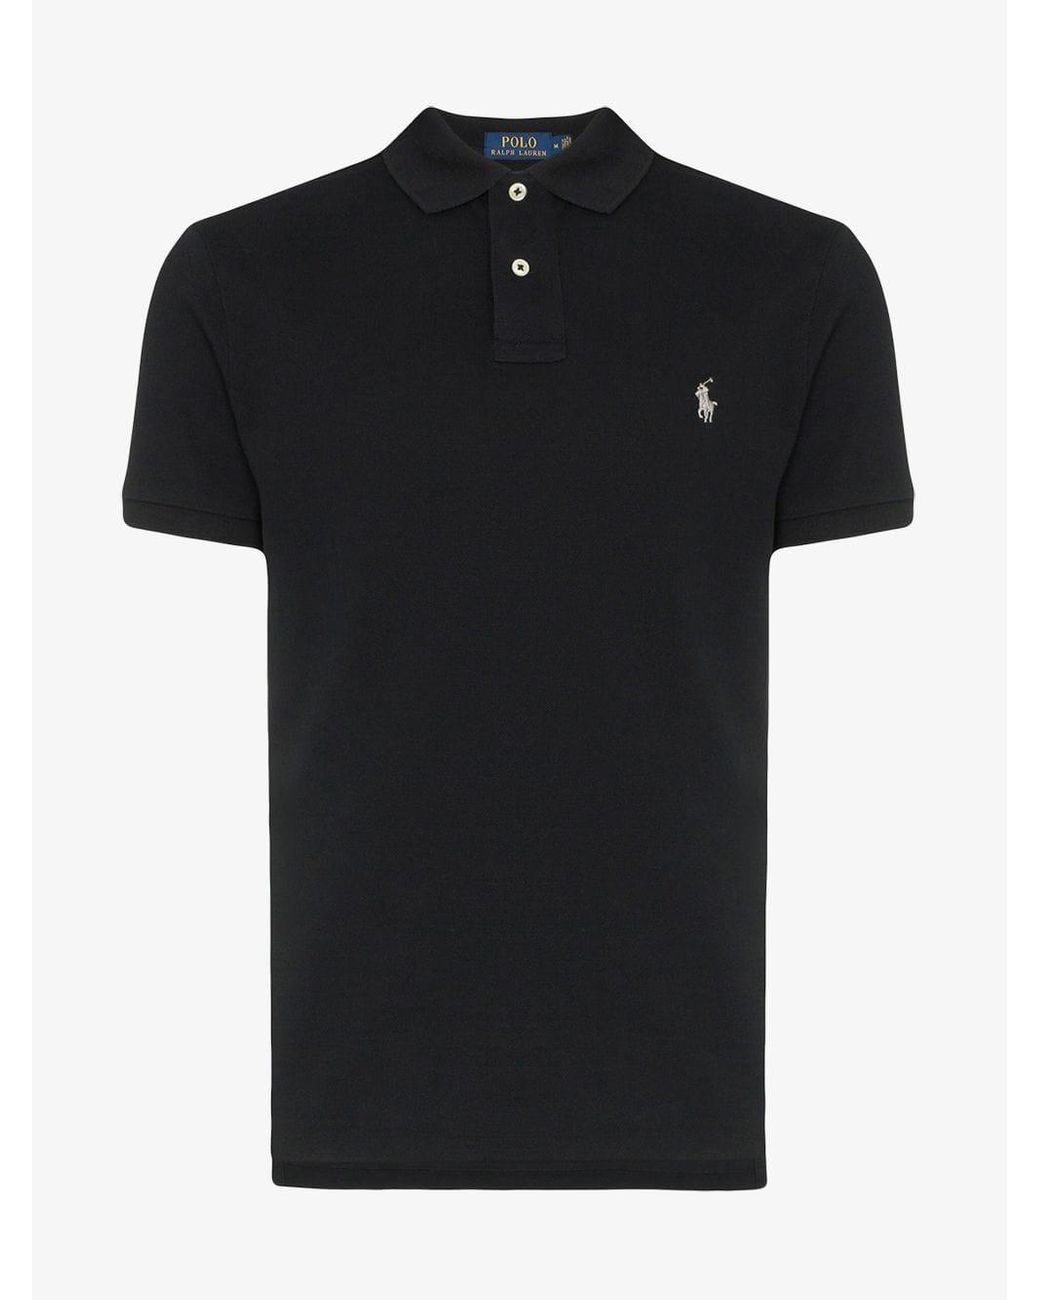 Polo Ralph Lauren Black Embroidered Logo Polo Shirt in Black for Men - Lyst